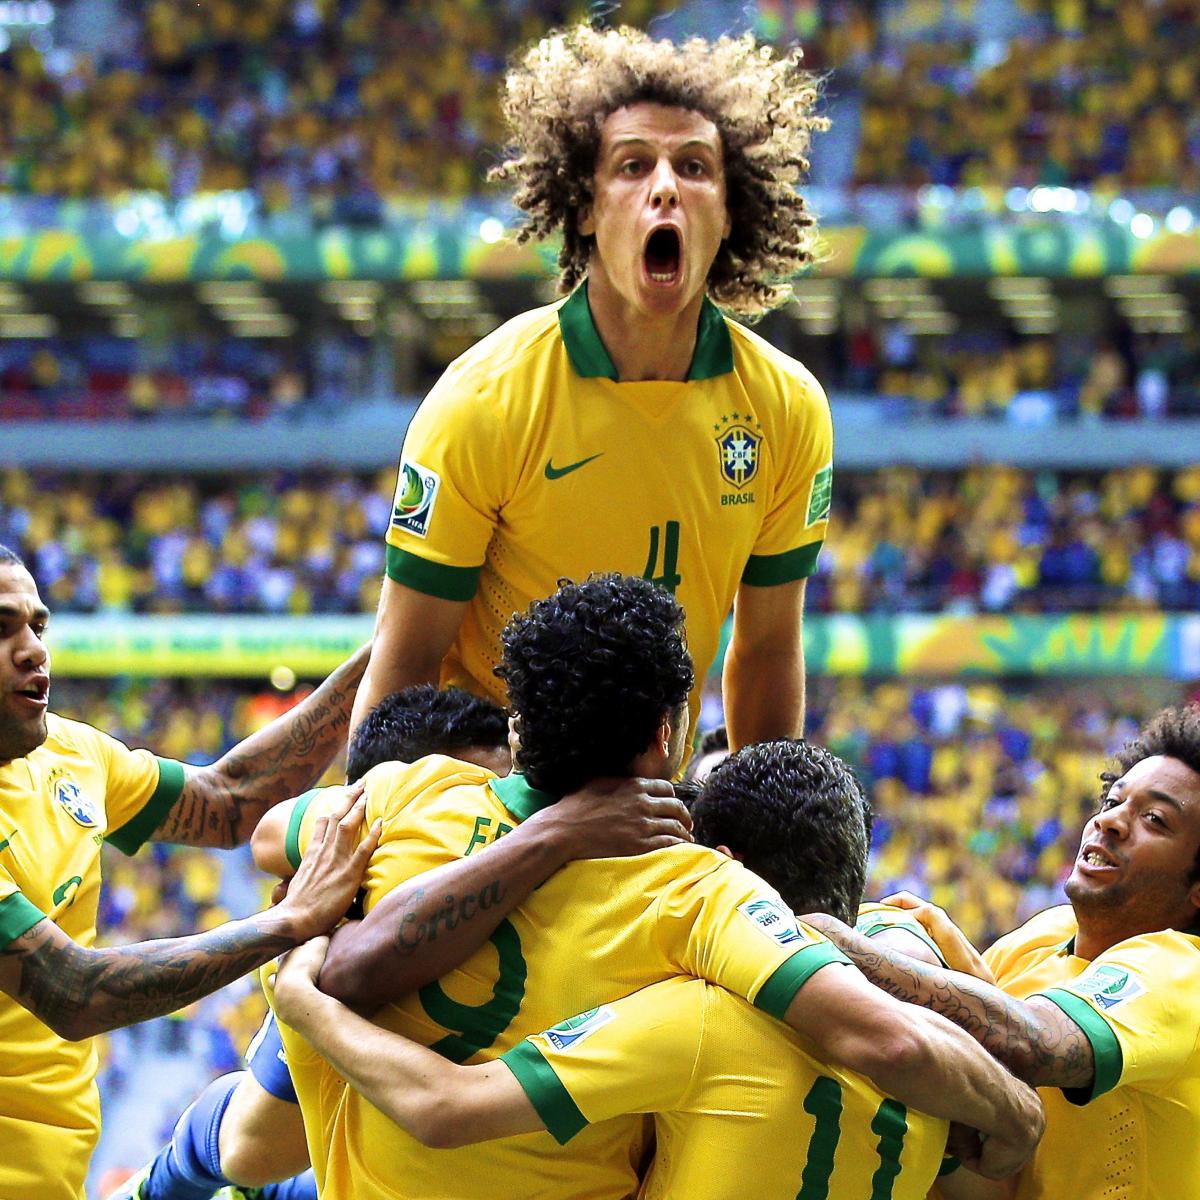 Adidas Brazuca Official World Cup 2014 Final Brazil Nigeria